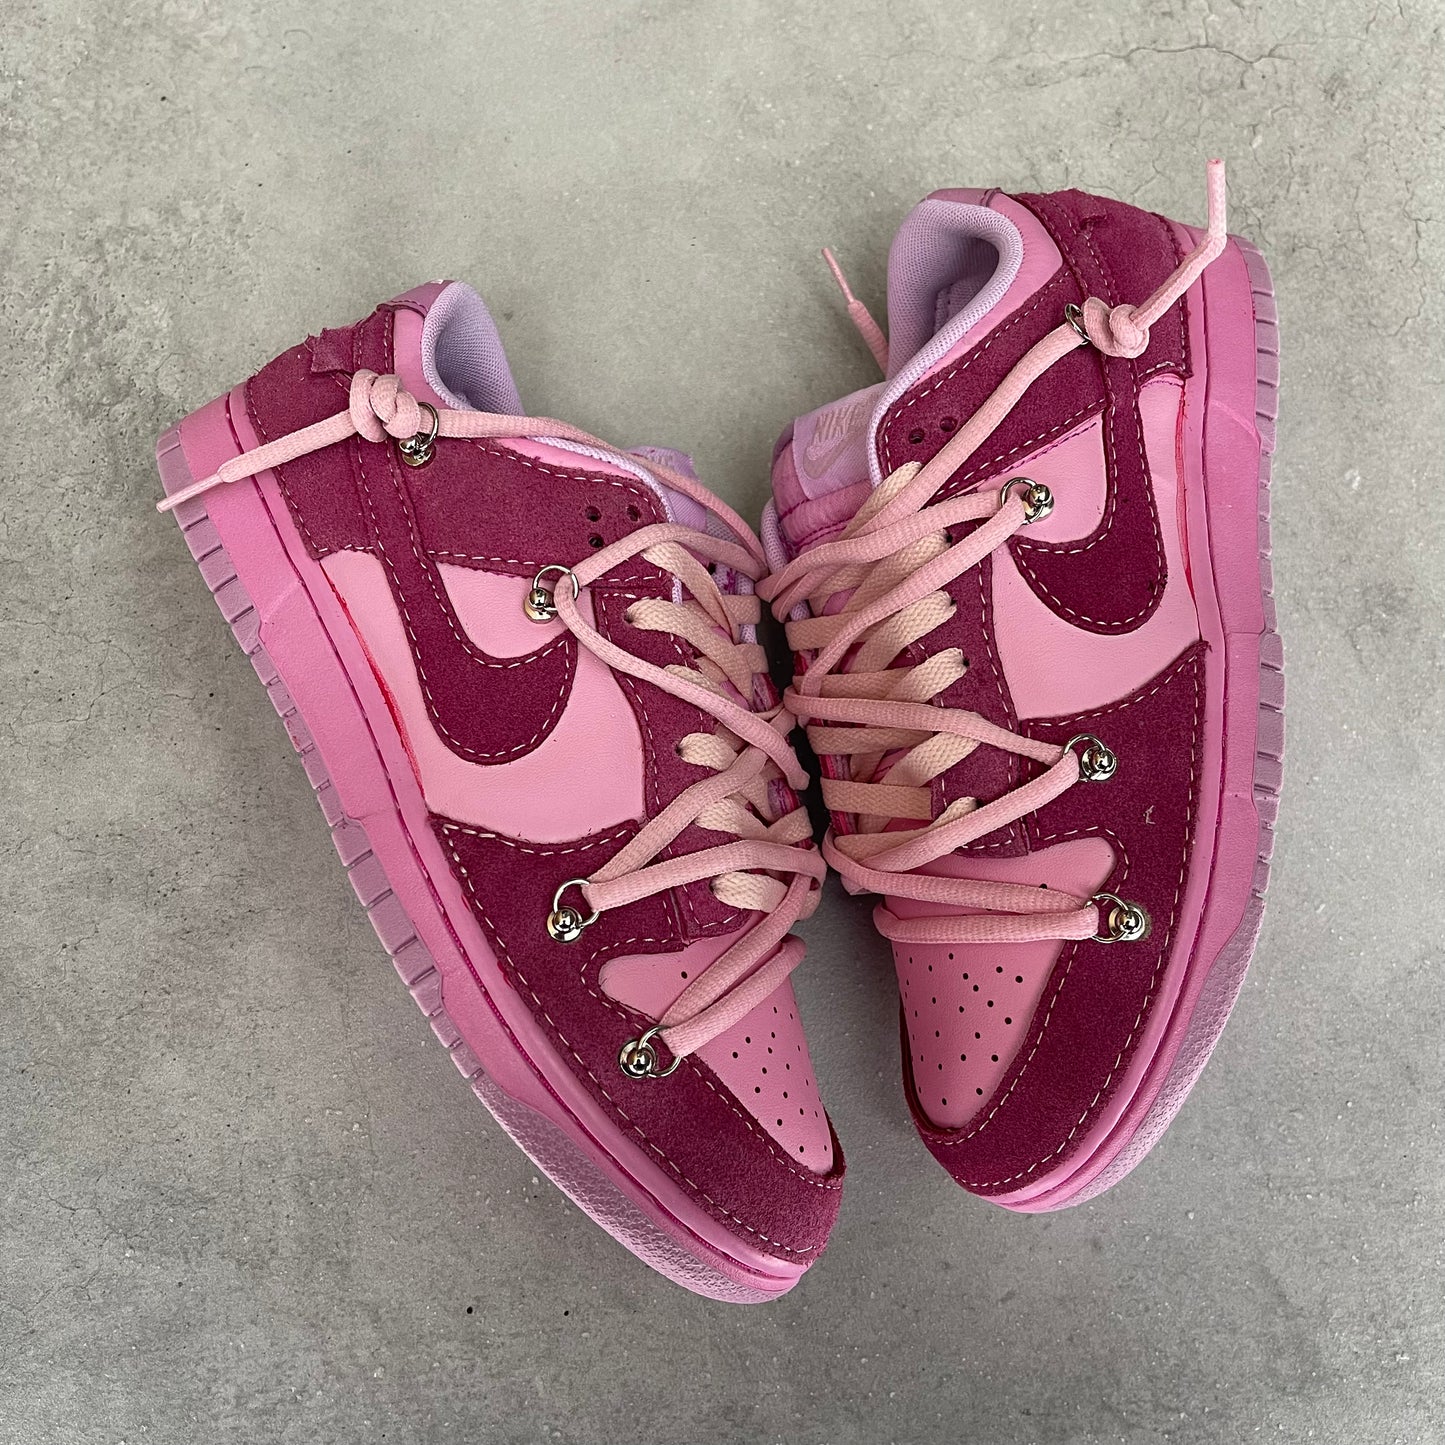 Custom Nike Dunk low - Pink suede Lot